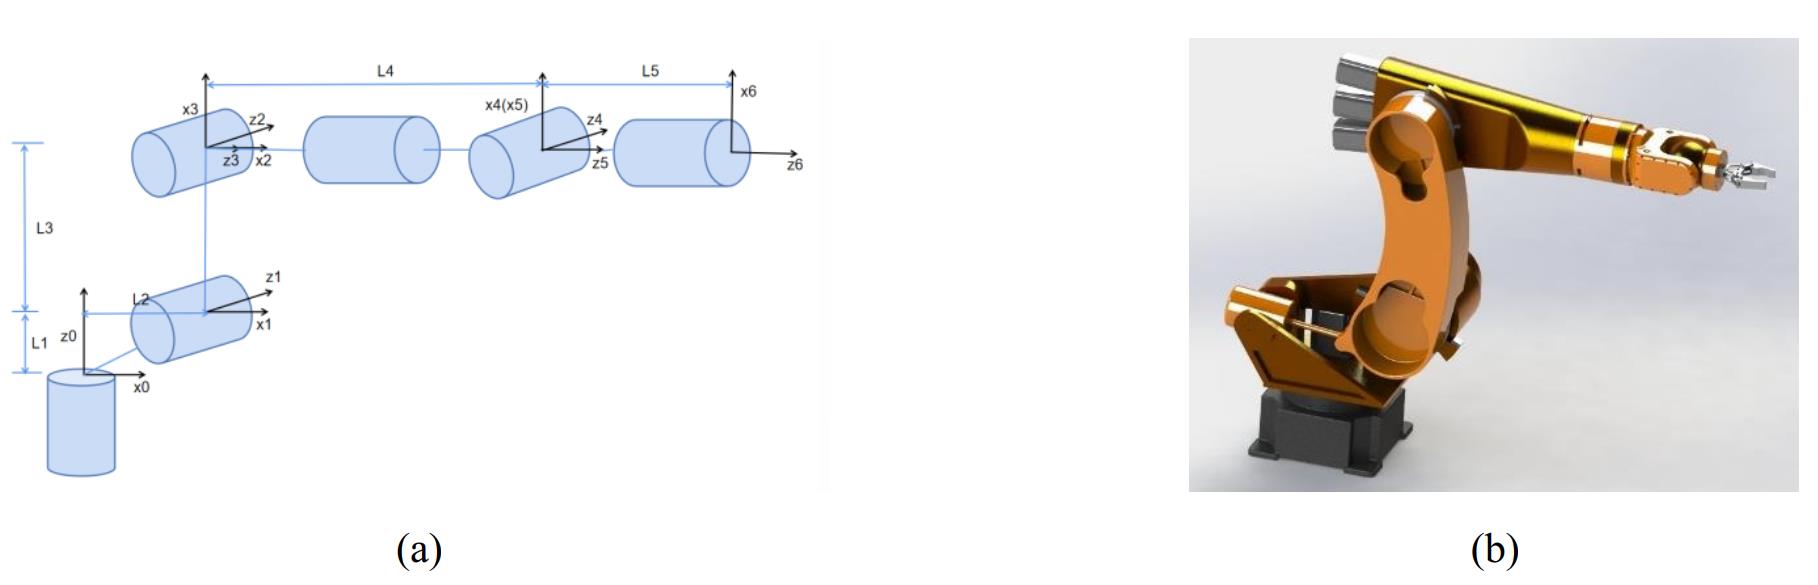 Fig. 1 A six-axis robotic arm. (a) Schematic structure. (b) Model diagram.